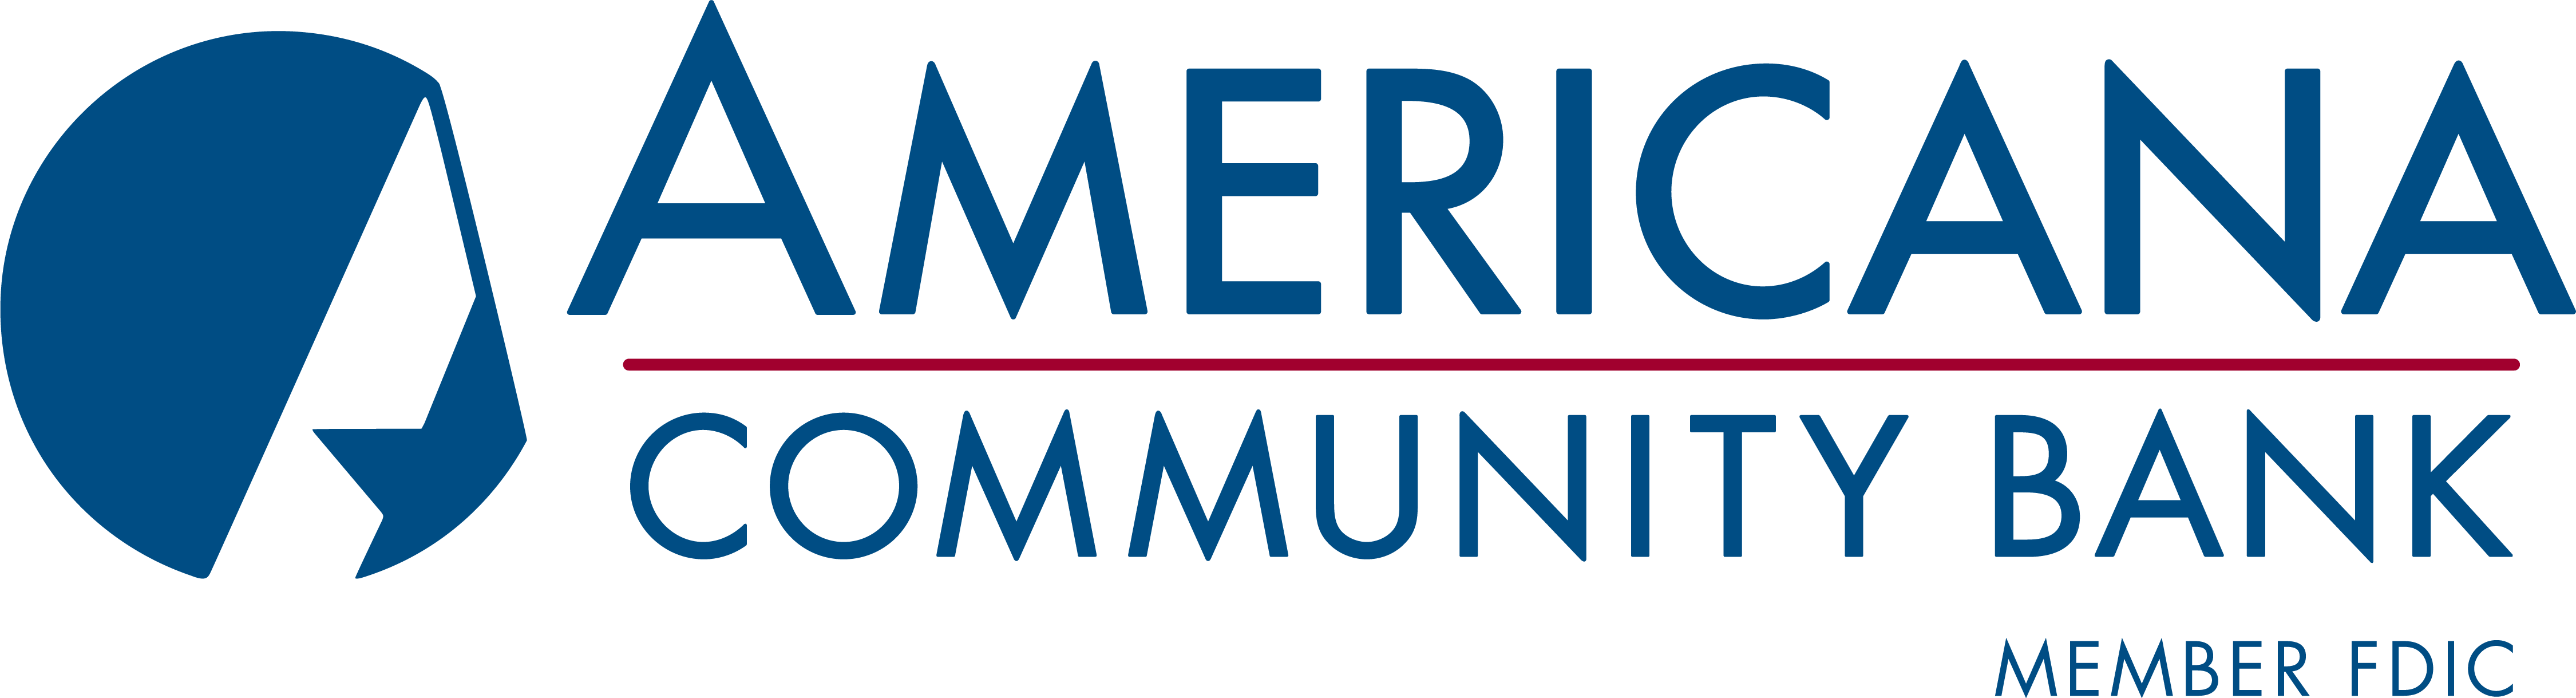 Americana Community Bank